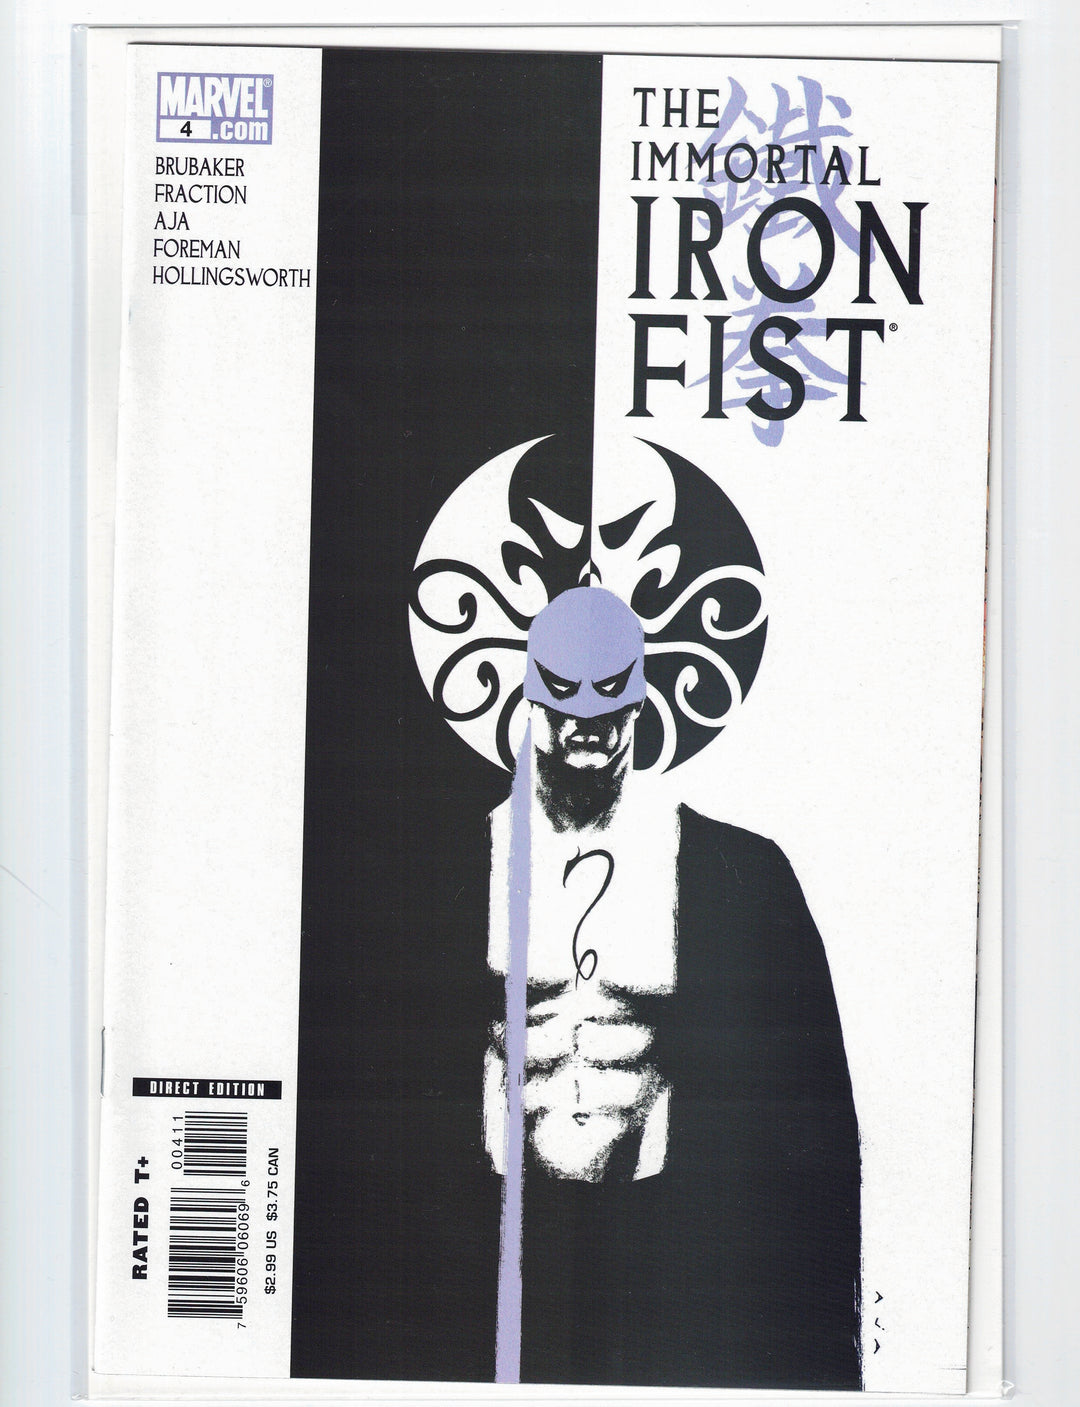 Immortal Iron Fist #1-6 "The Last Iron Fist Story"